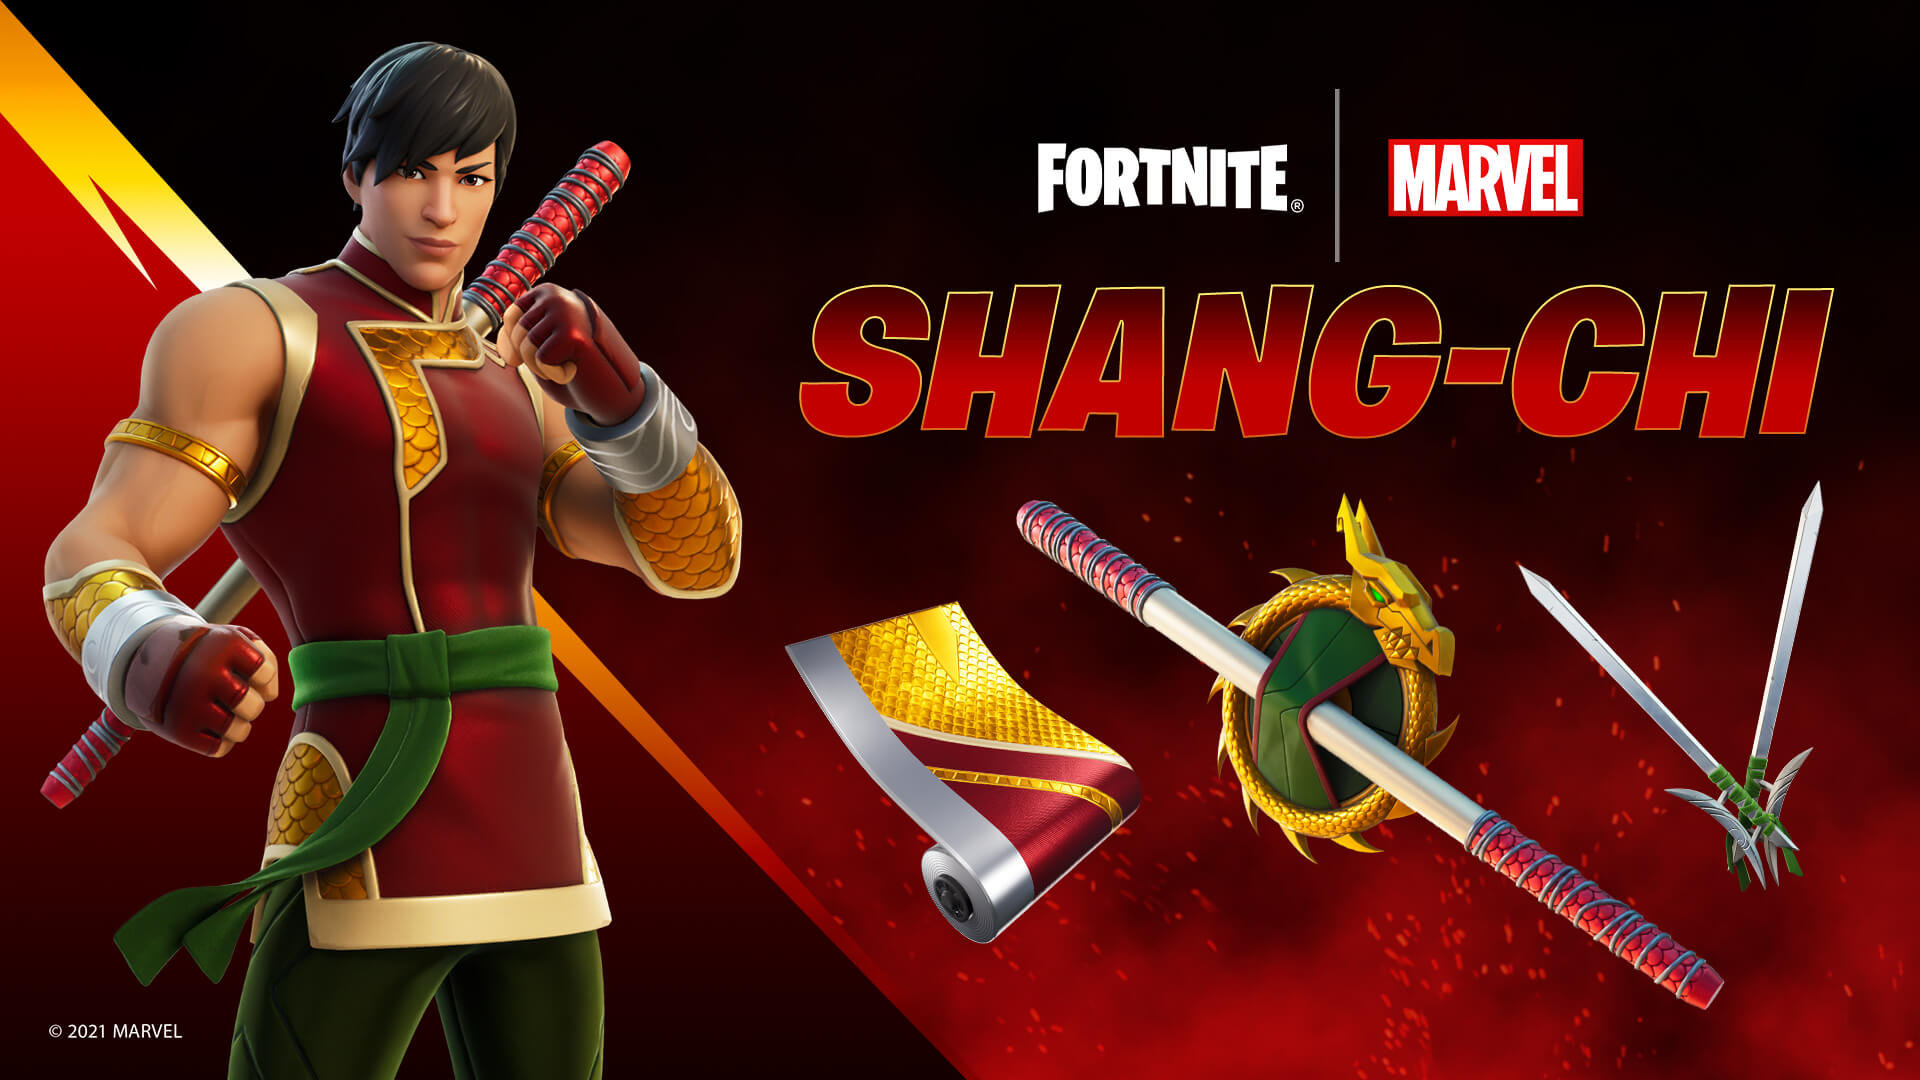 Marvel's Shang-Chi has arrived in Fortnite